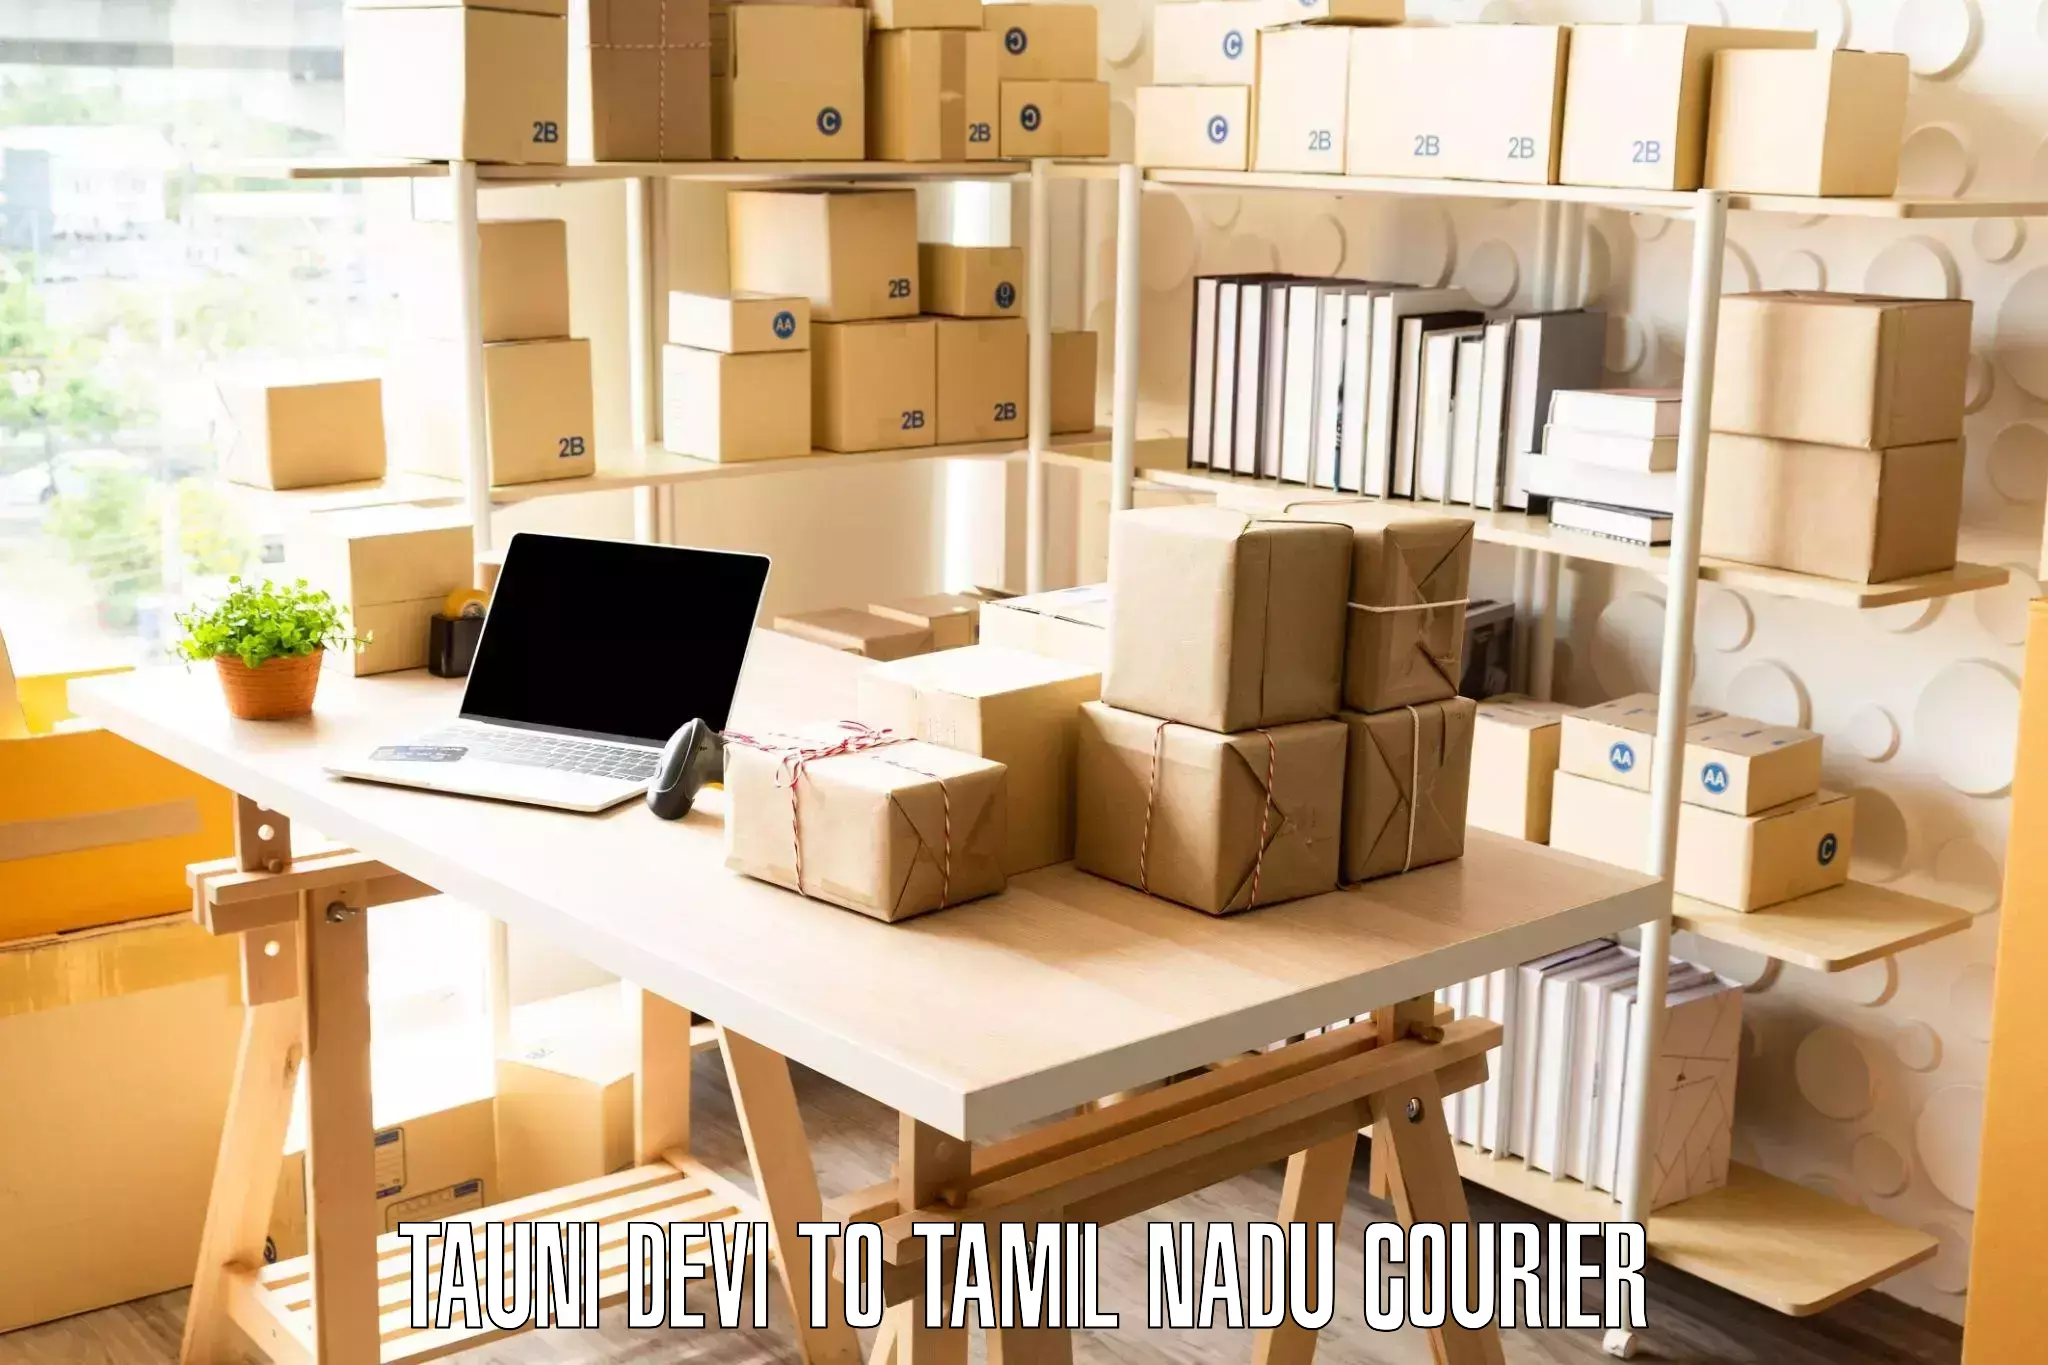 Quality moving company Tauni Devi to Chennai Port